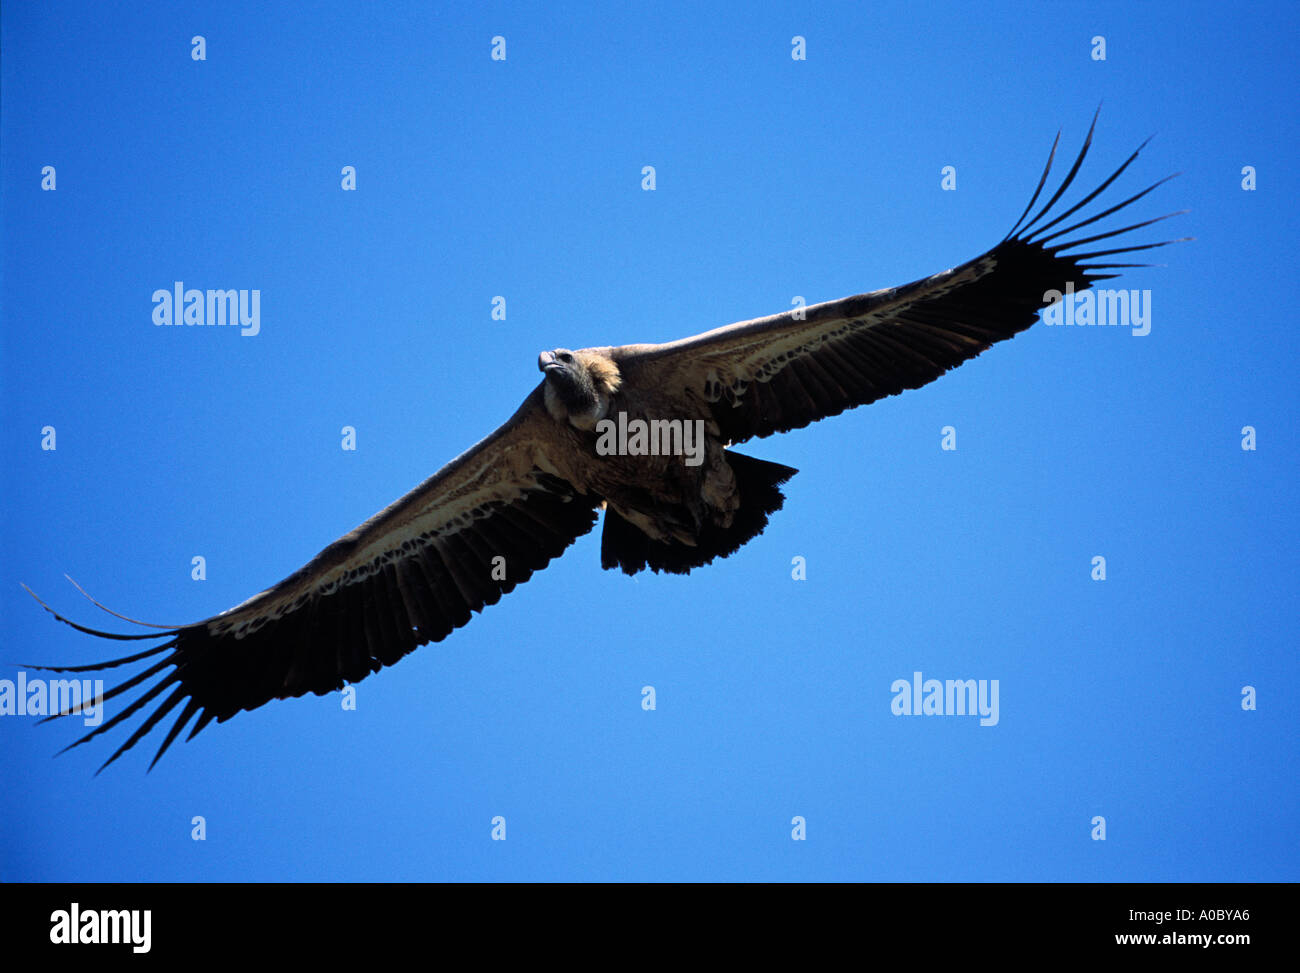 Europäische Griffon Vulture abgeschottet Fulvus im Flug Spanien Stockfoto